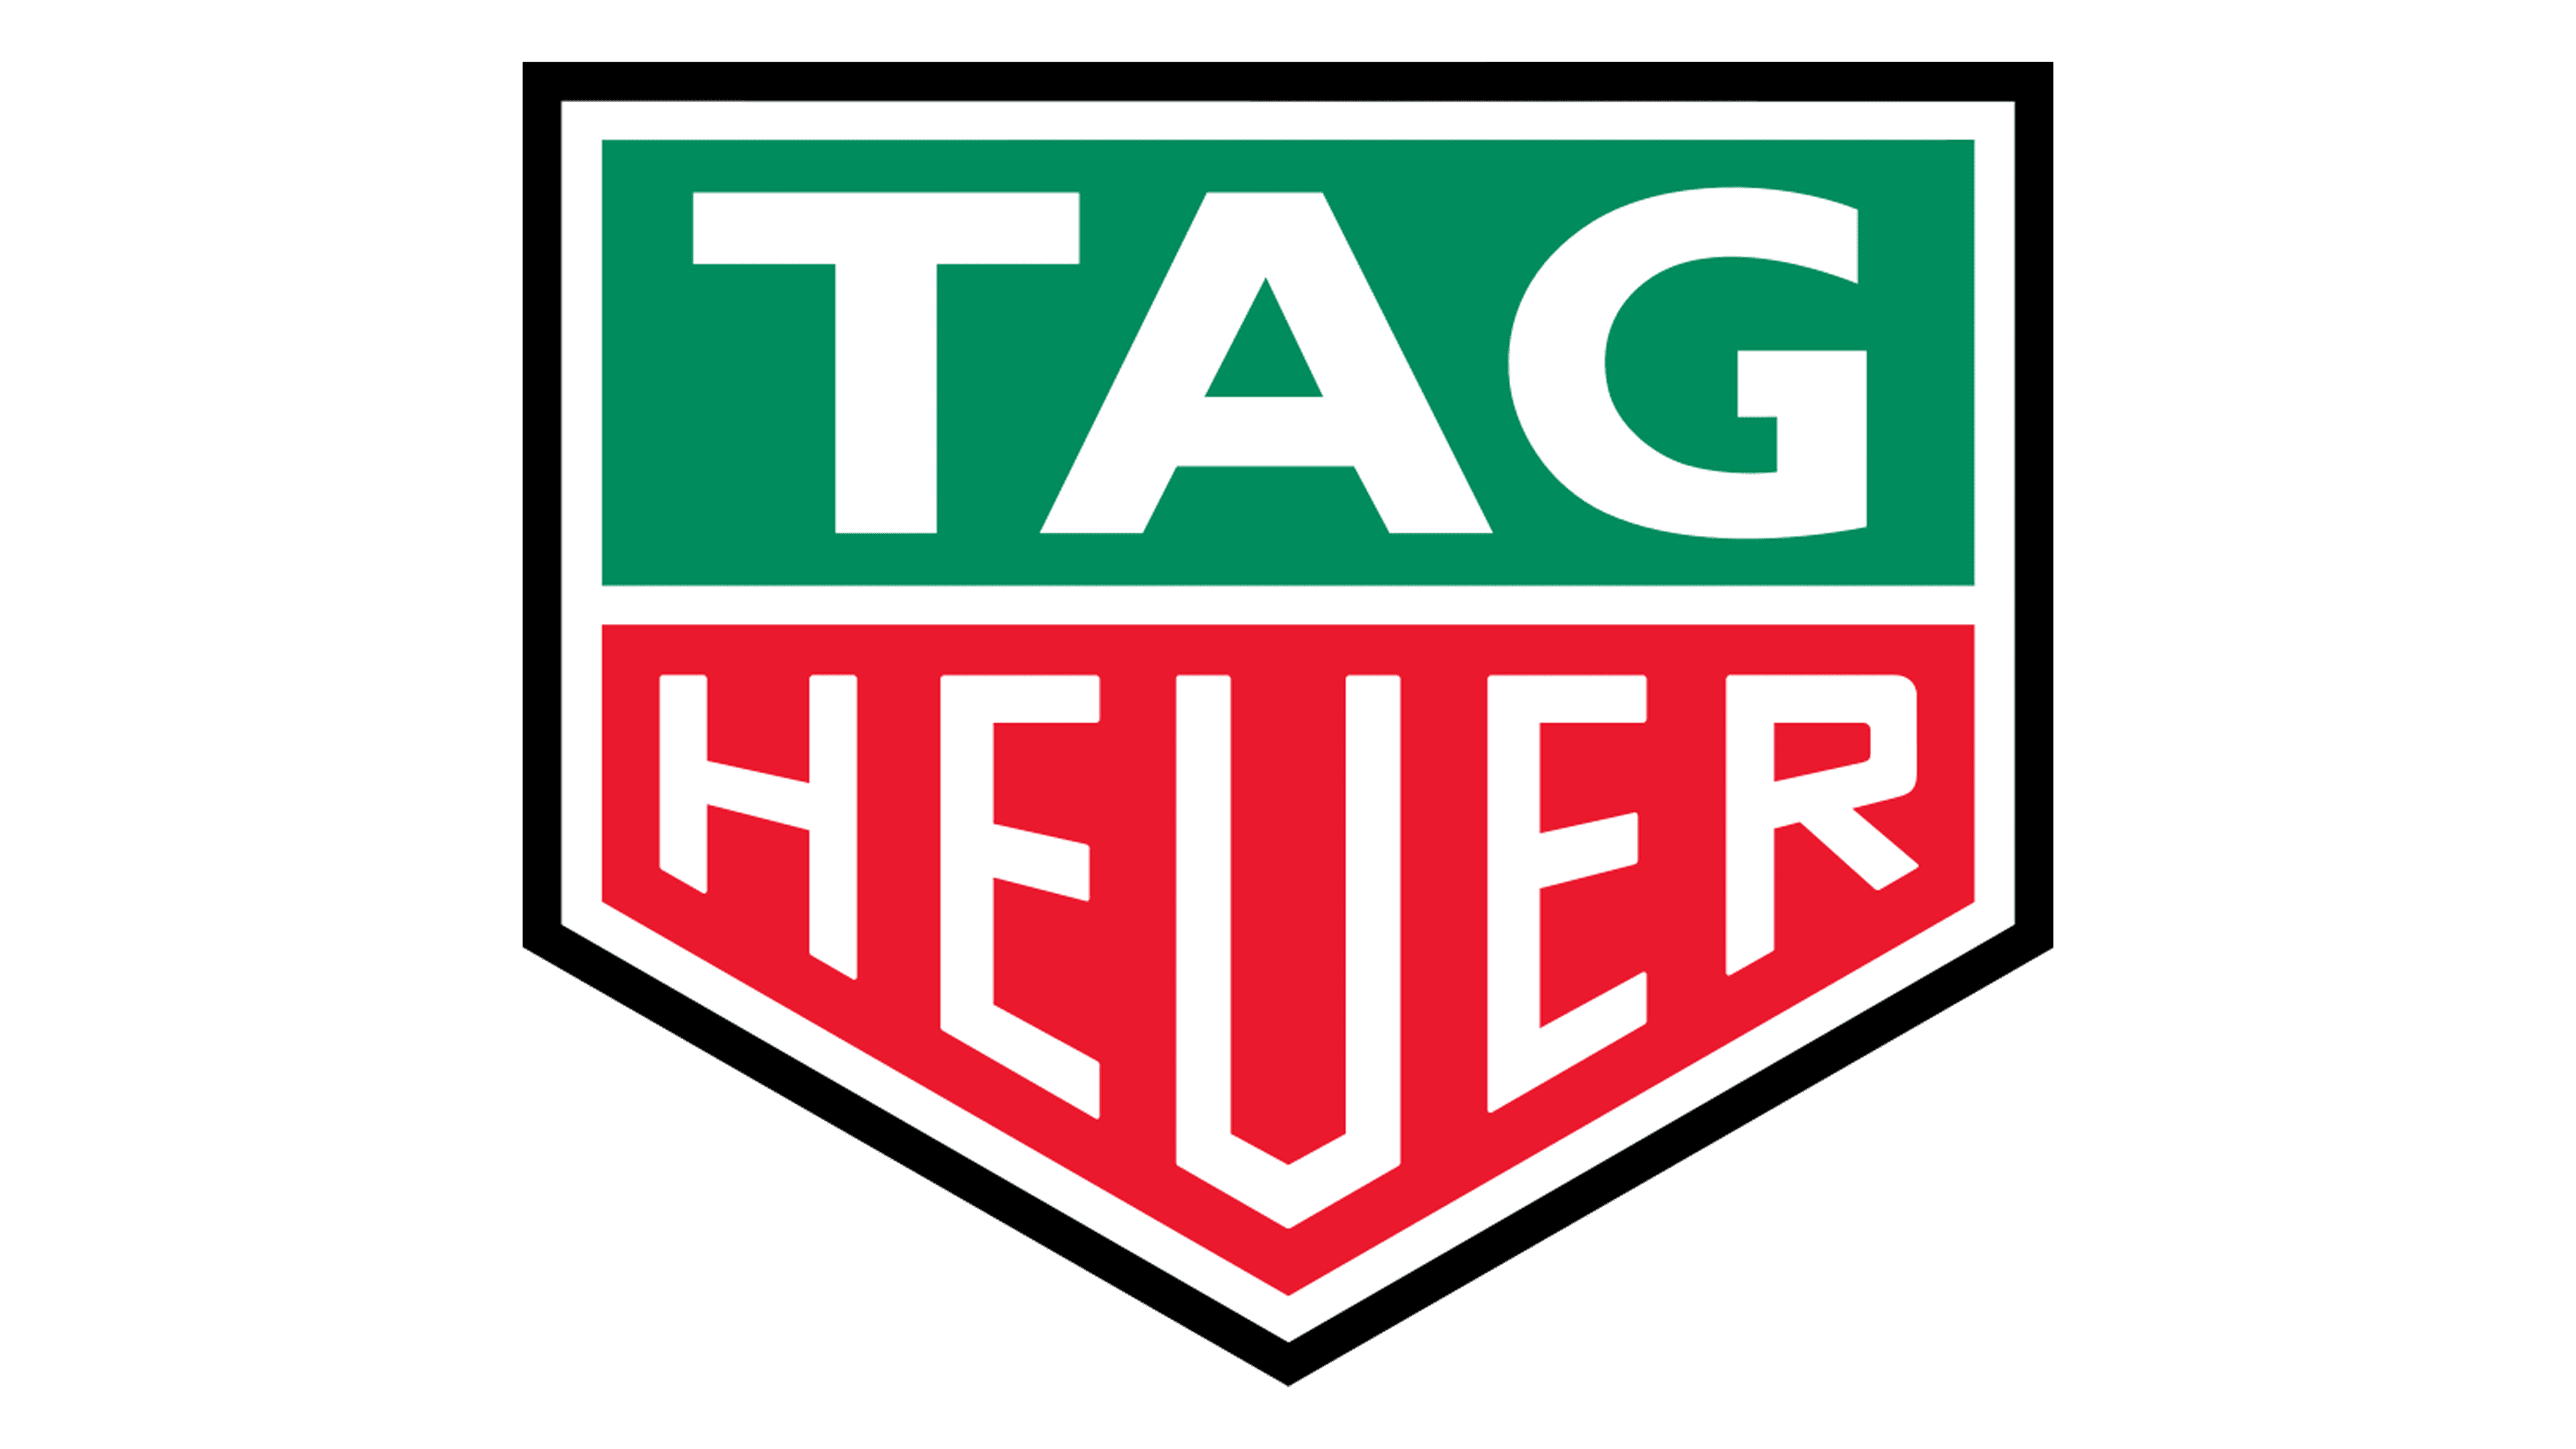 TAG Heuer Logo Logo